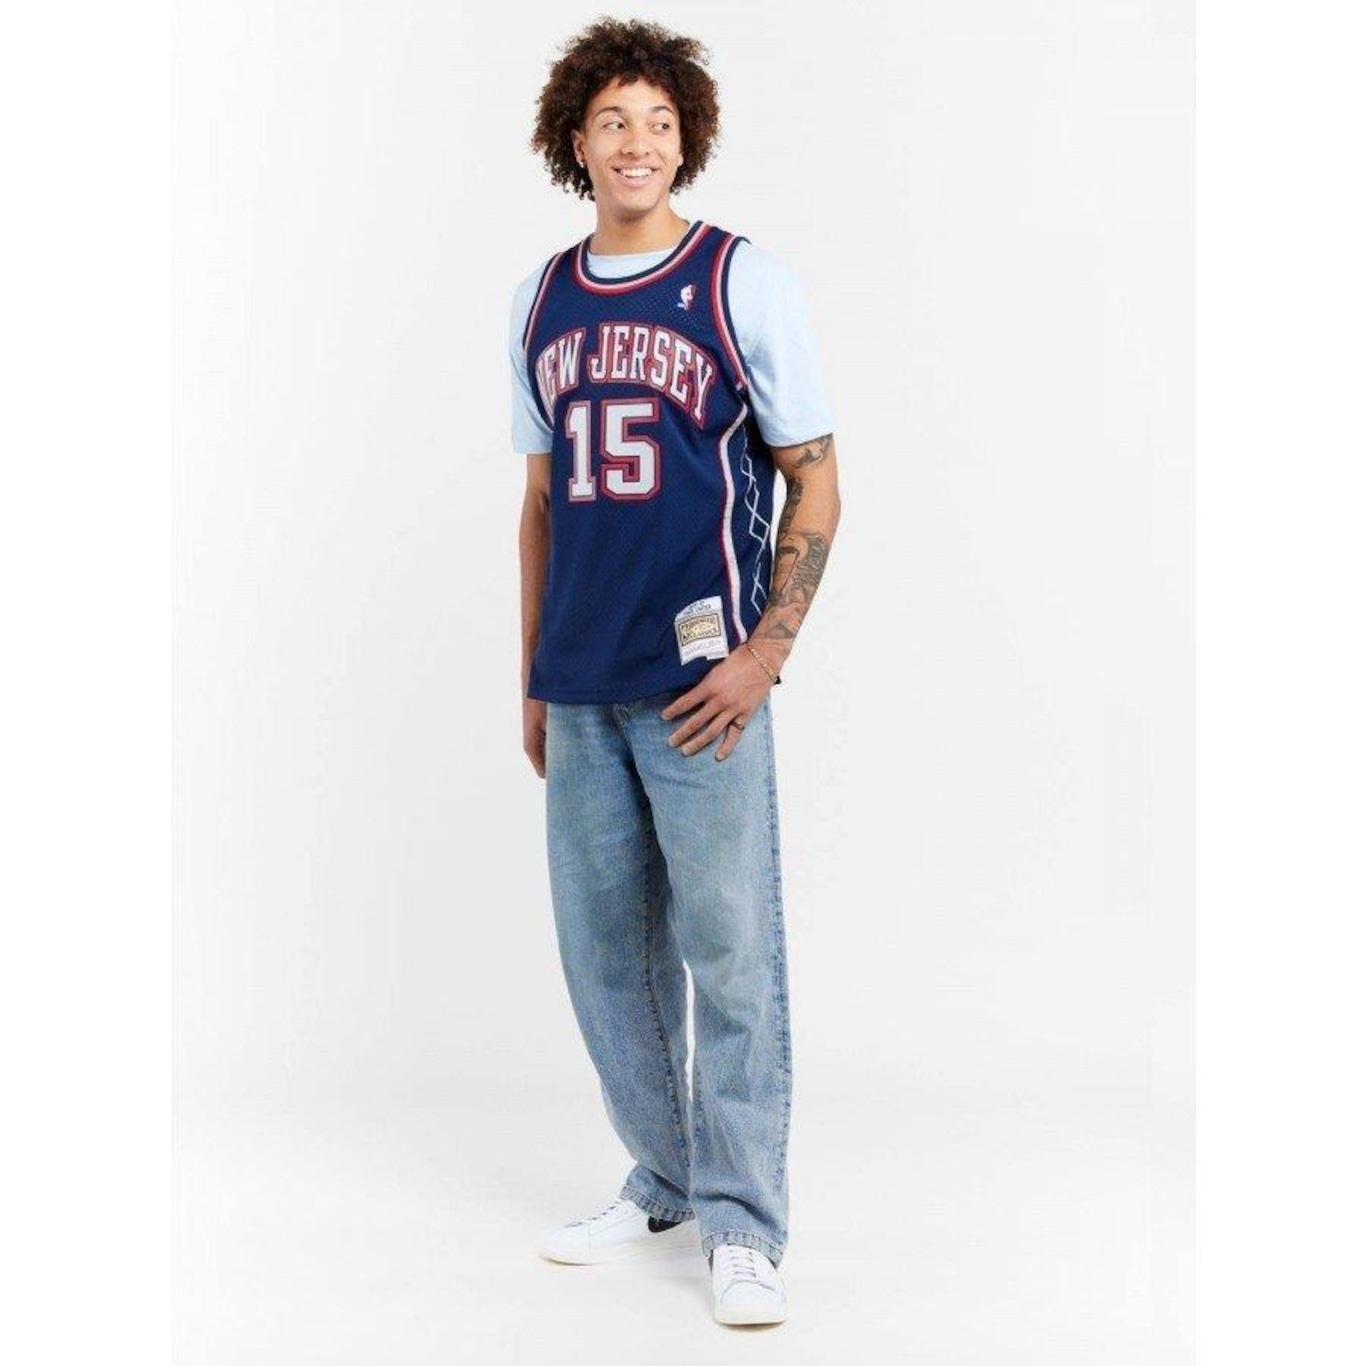 Camiseta Vince Carter New Jersey Nets retro swingman